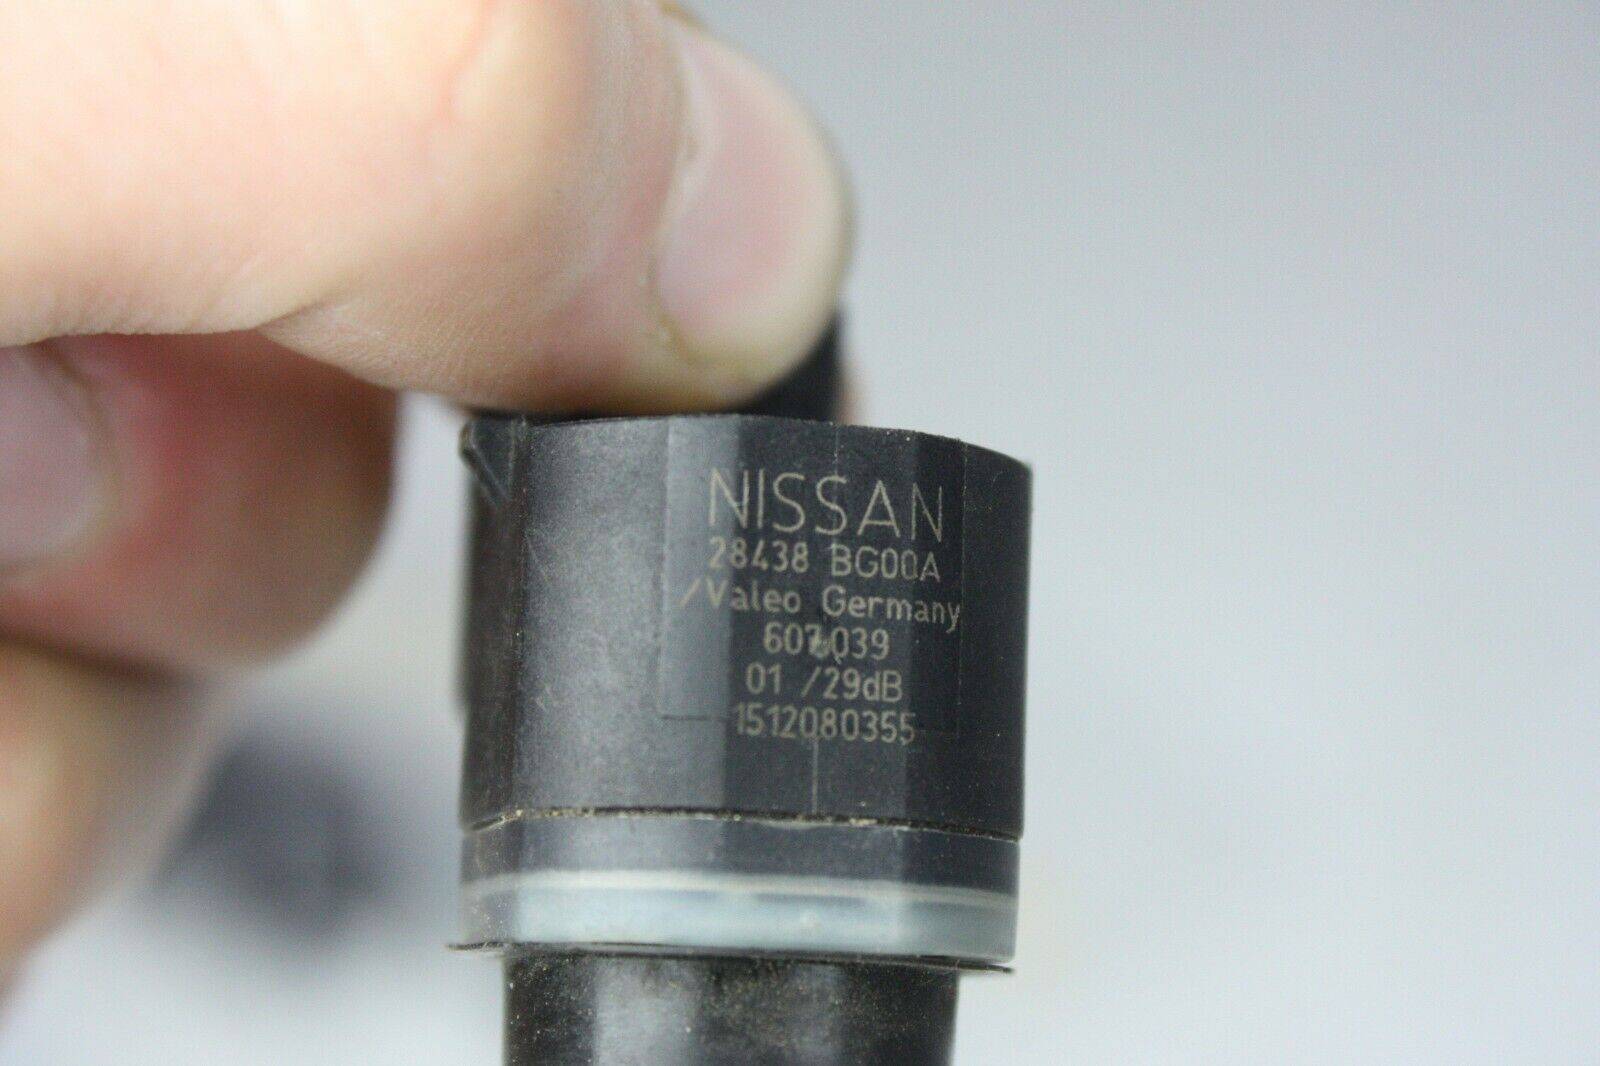 Nissan-Qashqai-PDC-Bumper-Parking-Sensor-2007-To-2013-176469421441-8